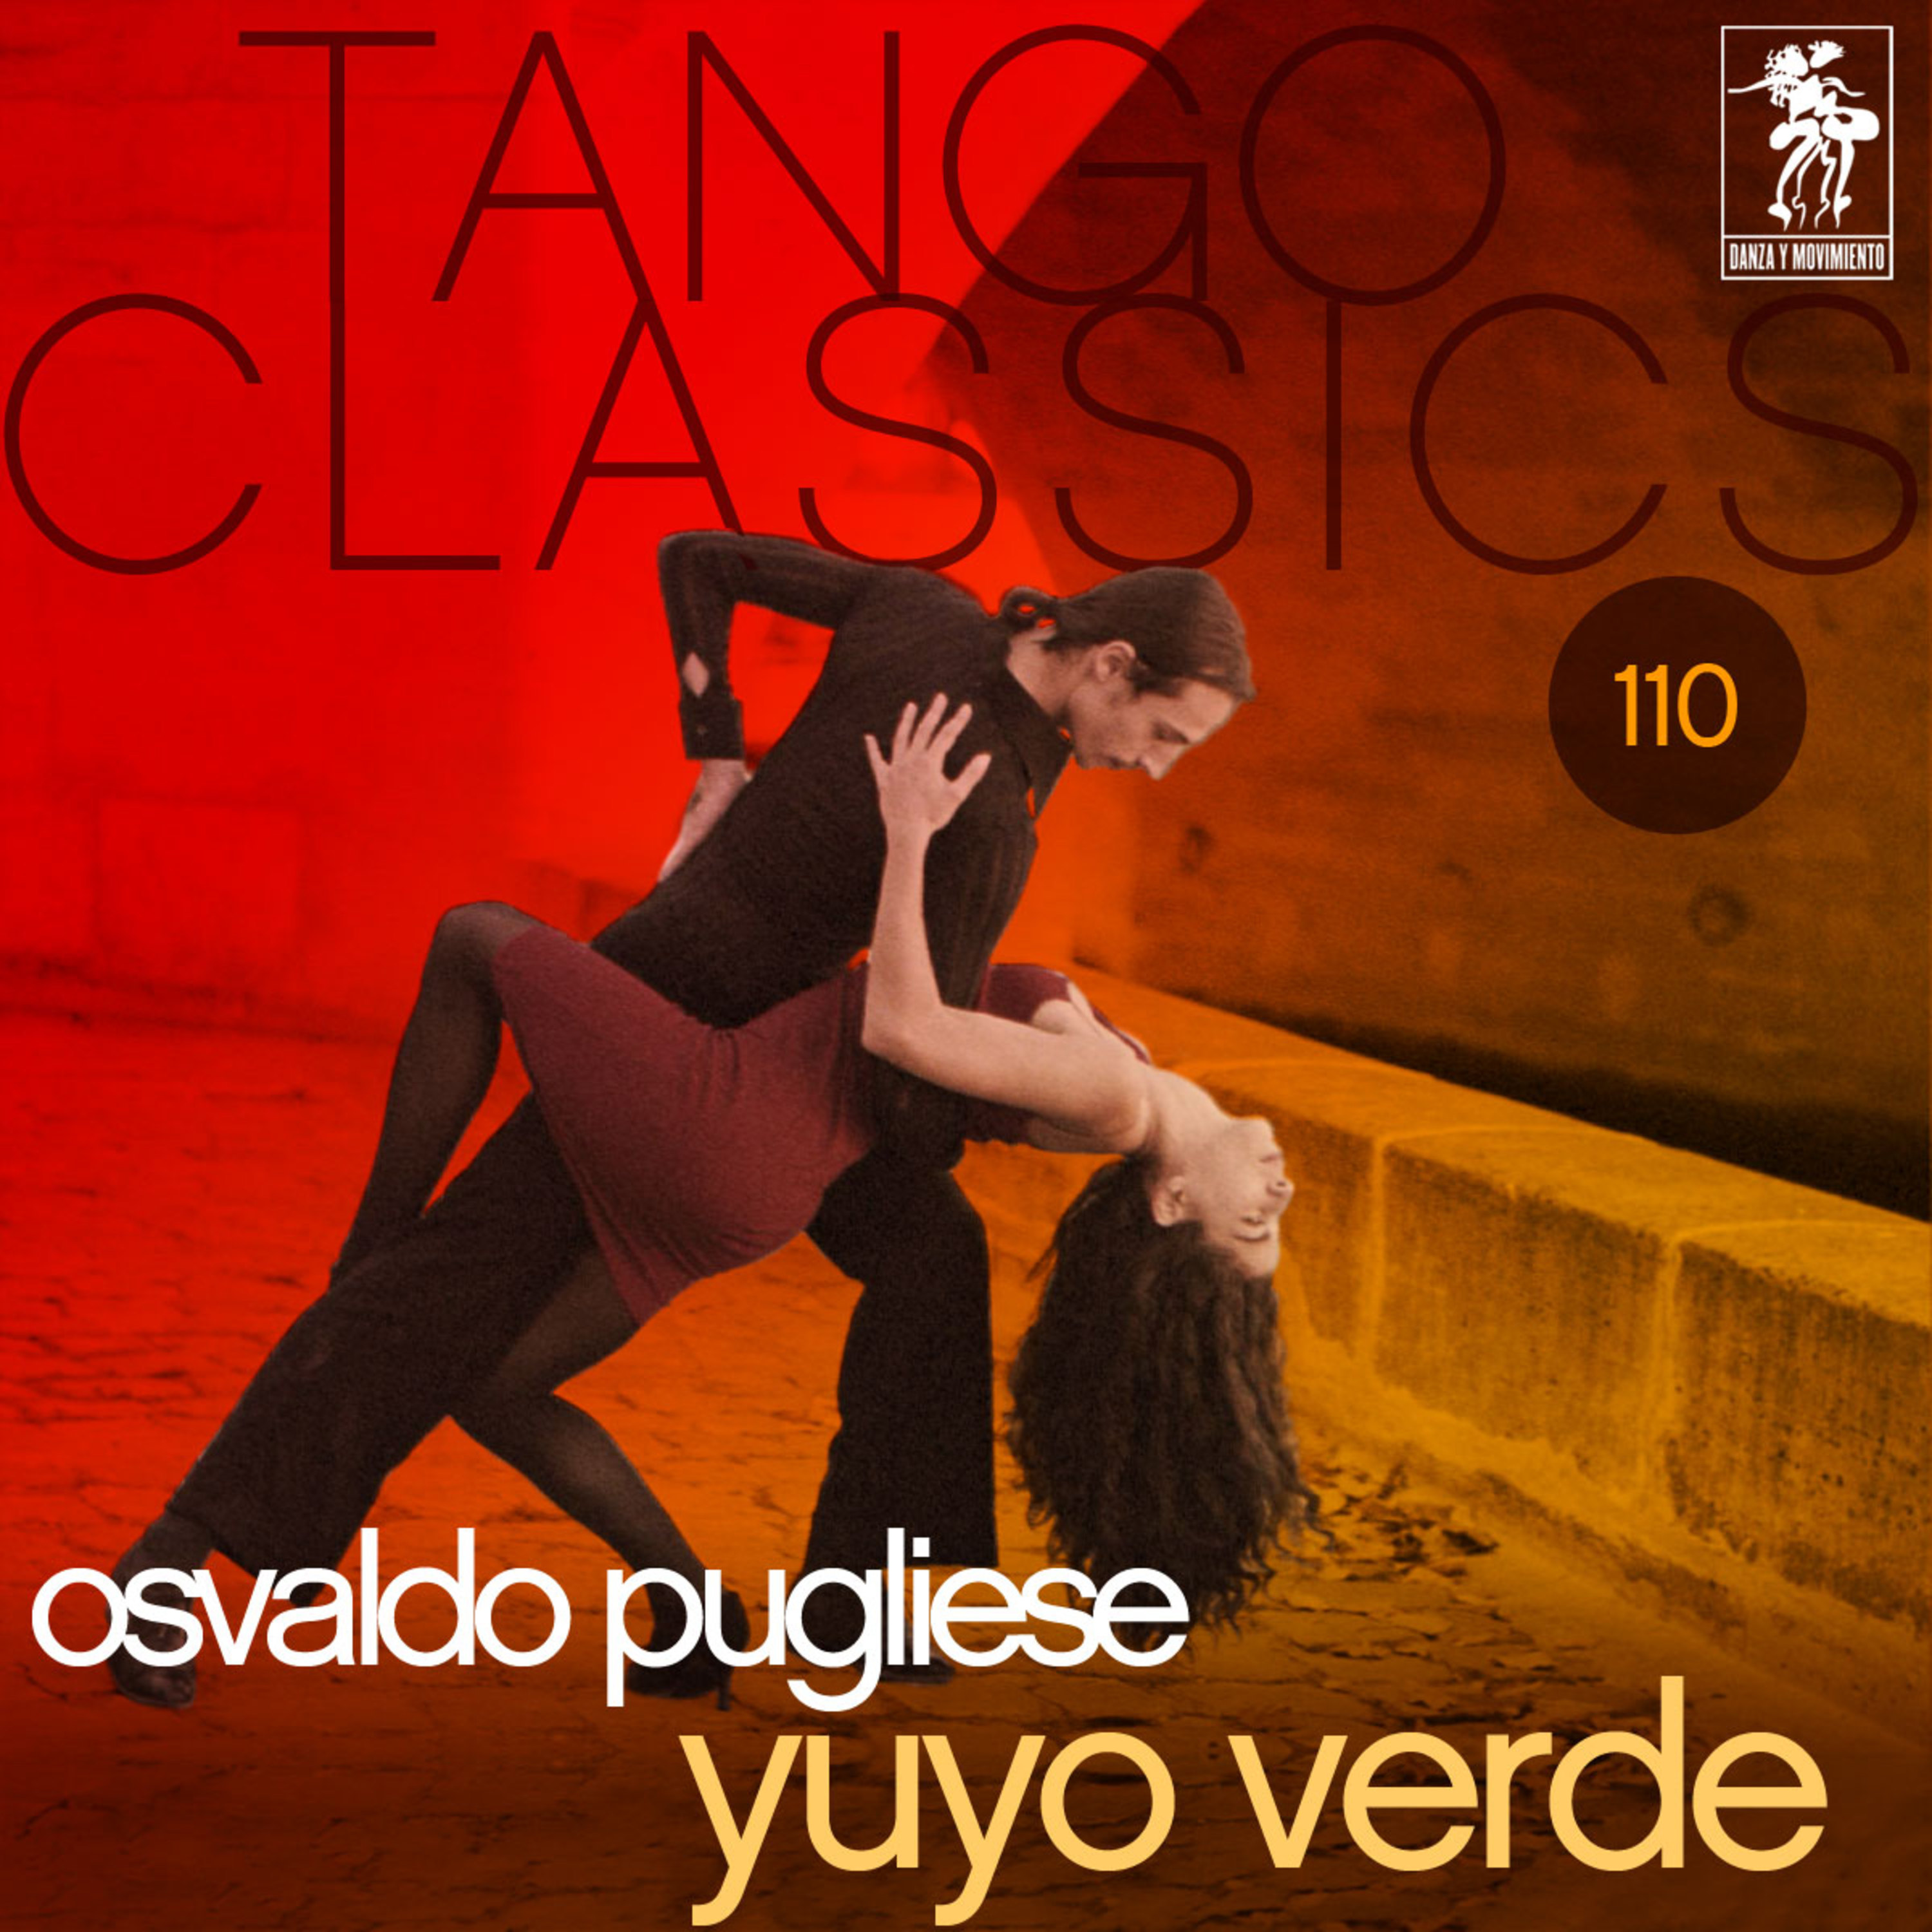 Tango Classics 110: Yuyo verde